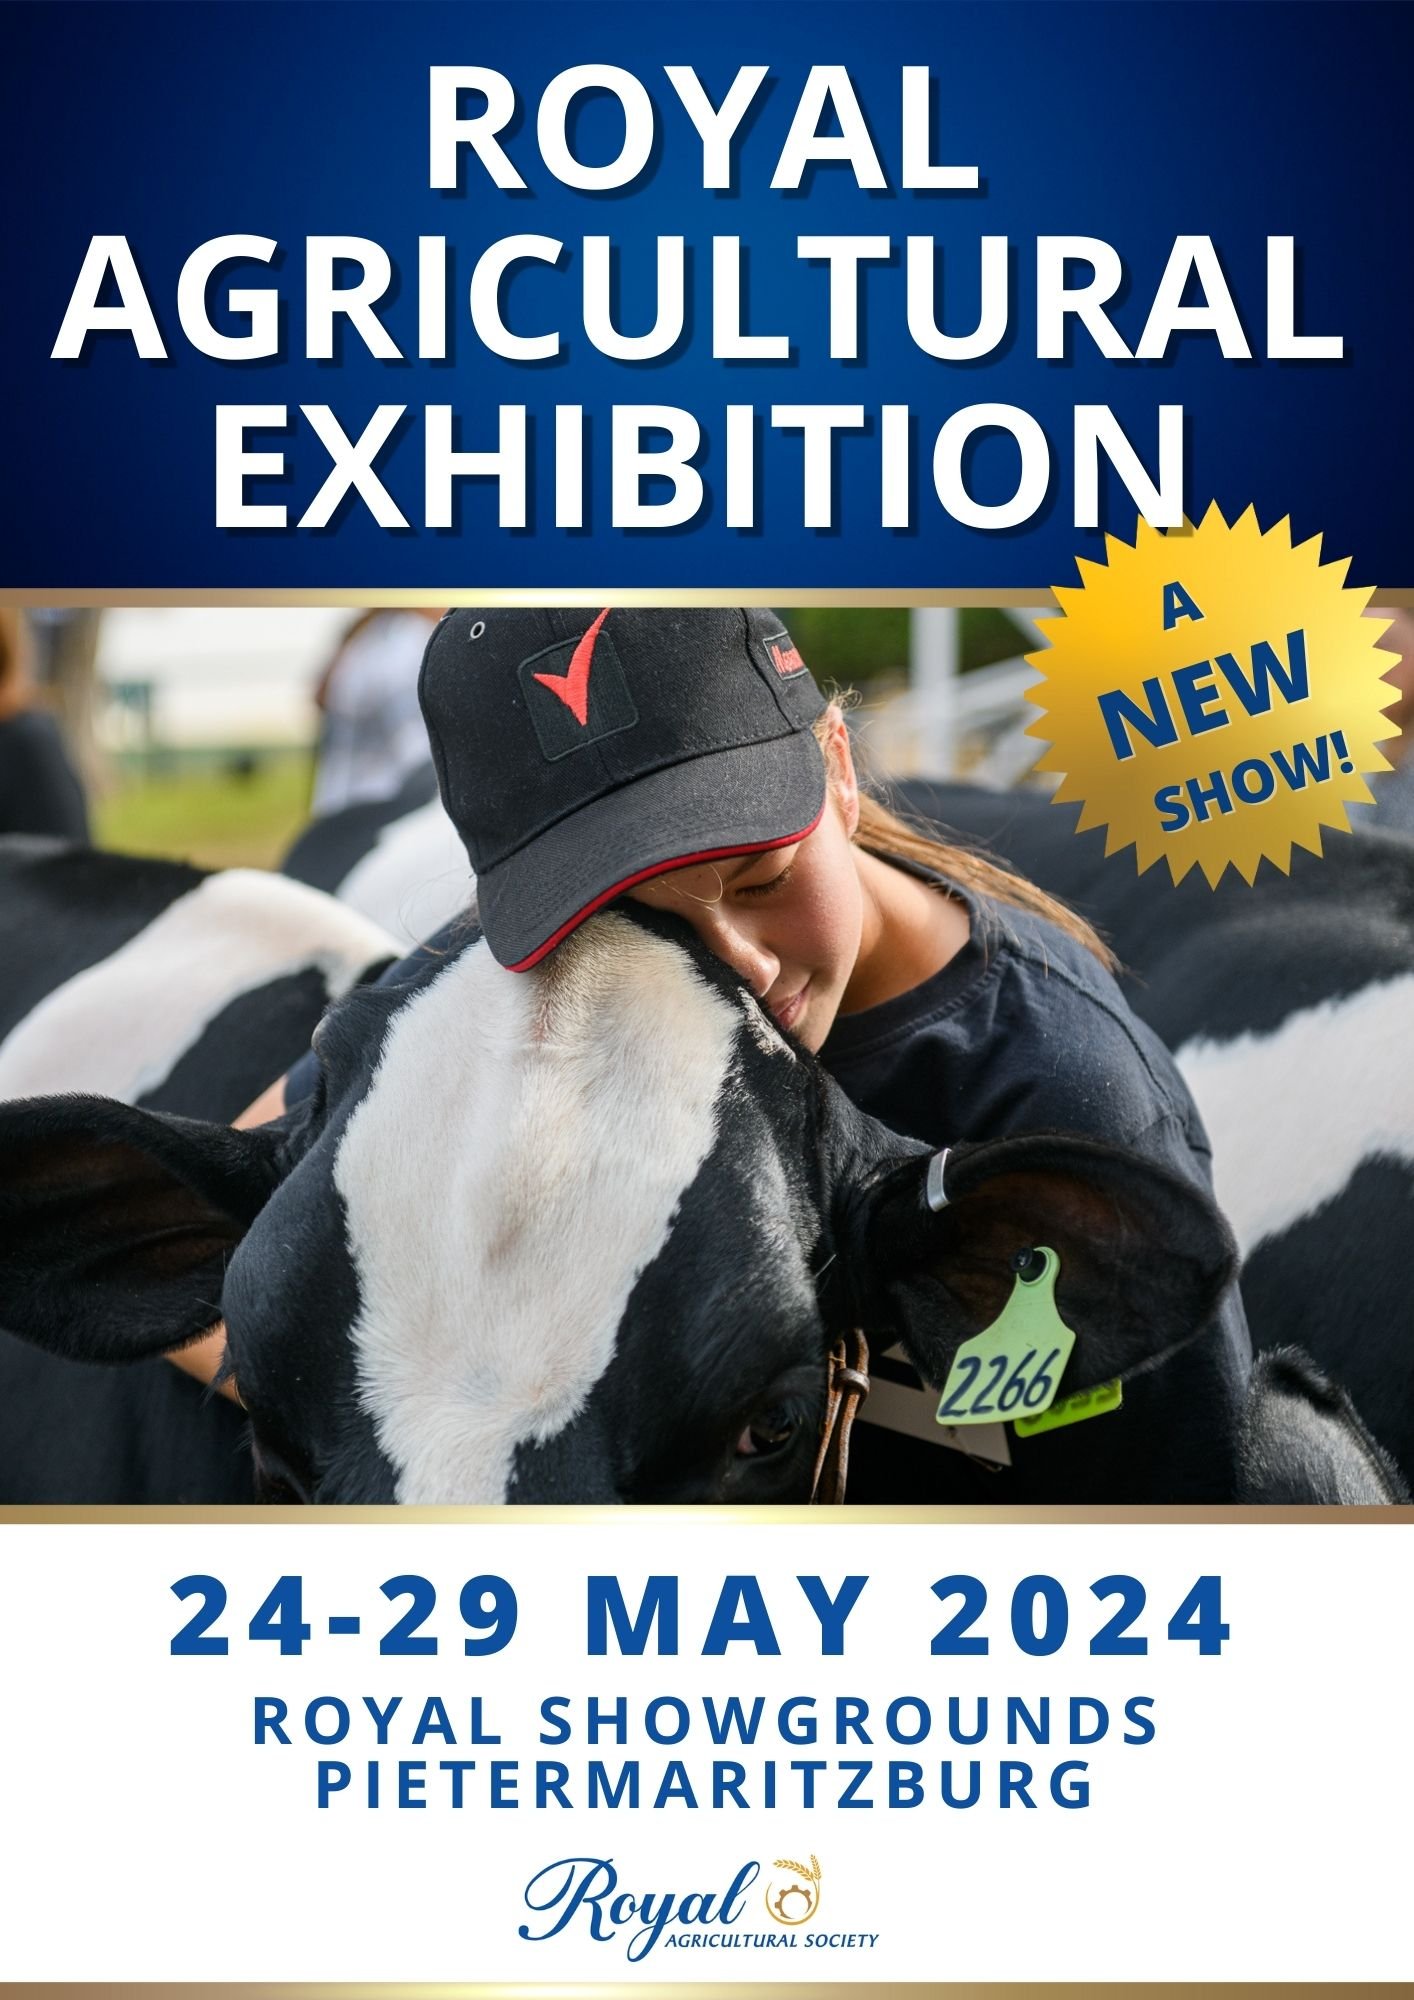 royal-agricultural-exhibition-may-2024-4.jpg